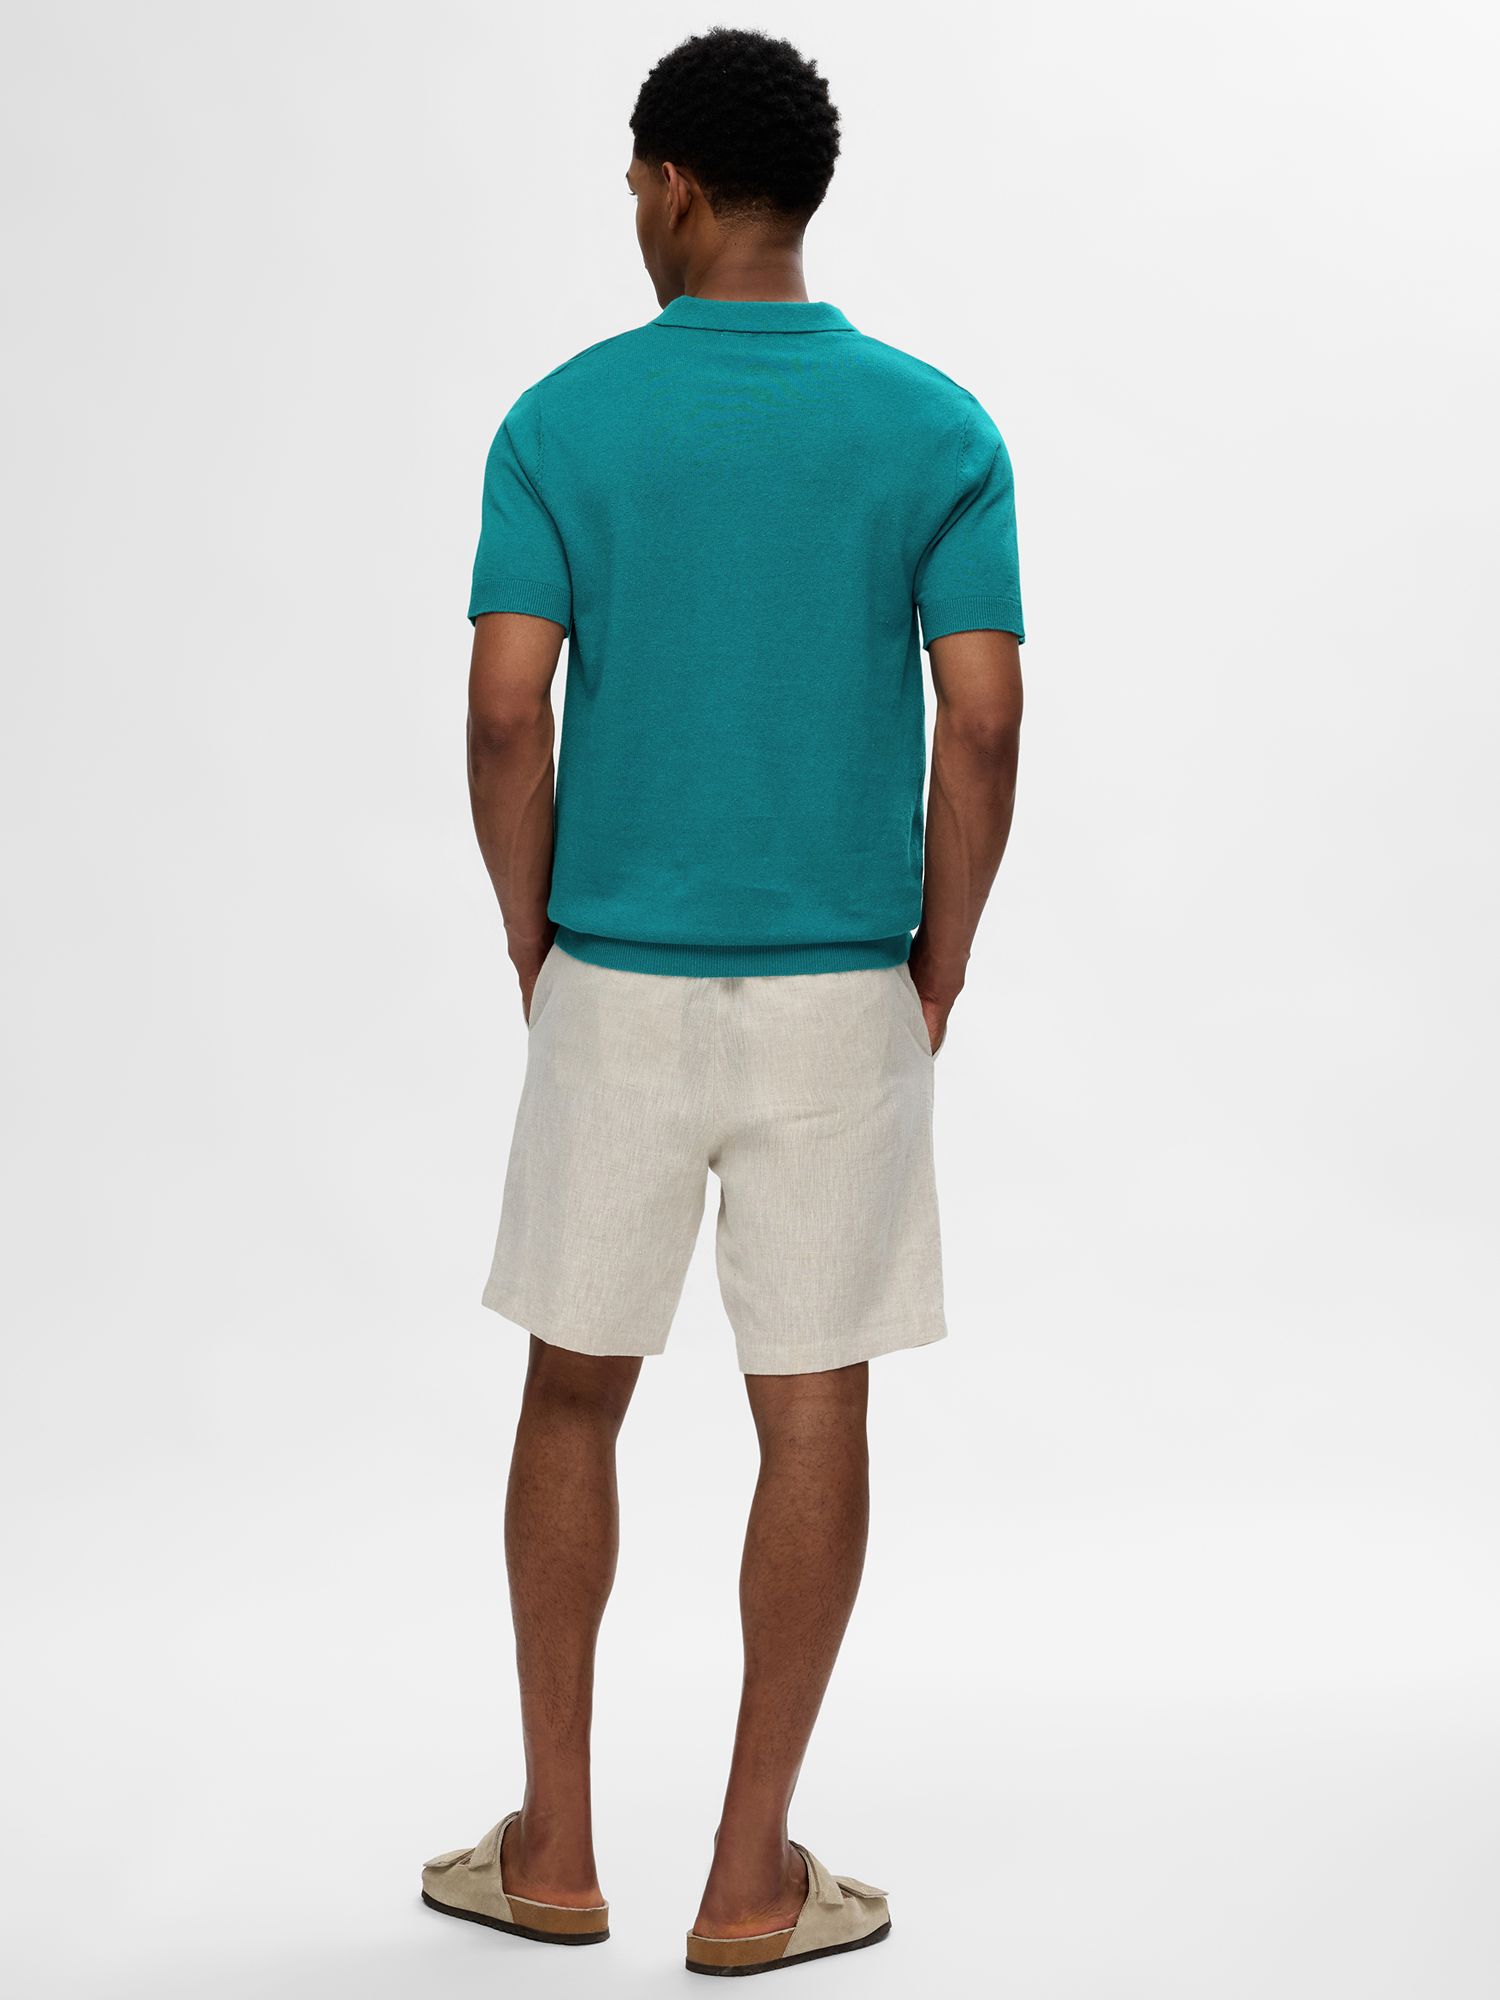 SELECTED HOMME Short Sleeve Linen Polo Shirt, Blue, S